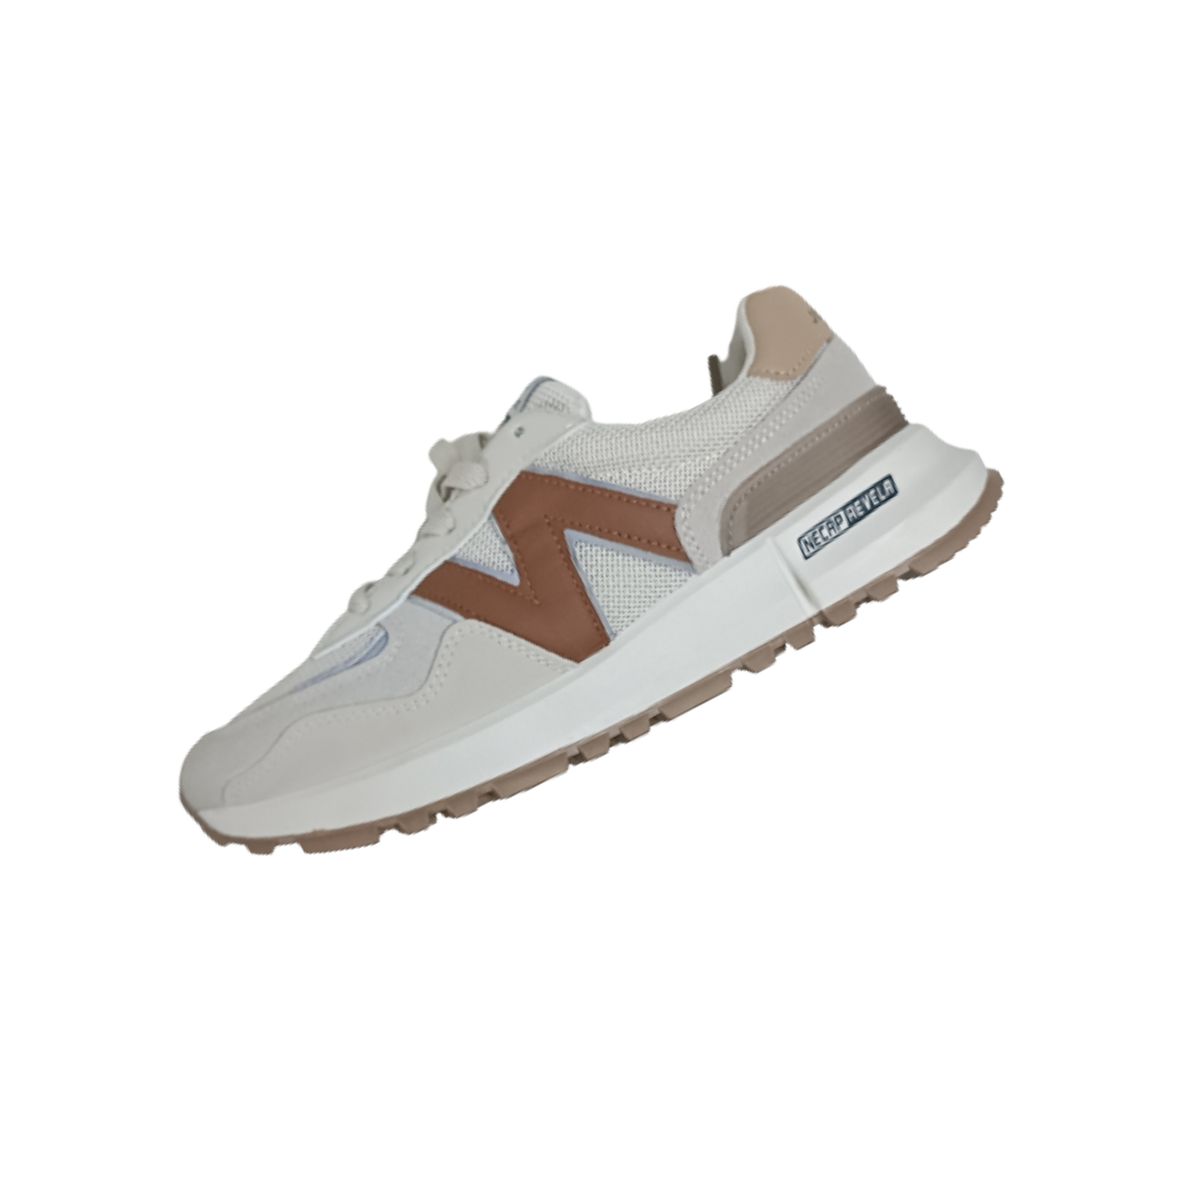 New Fashion Shoe 520 - White & Brown